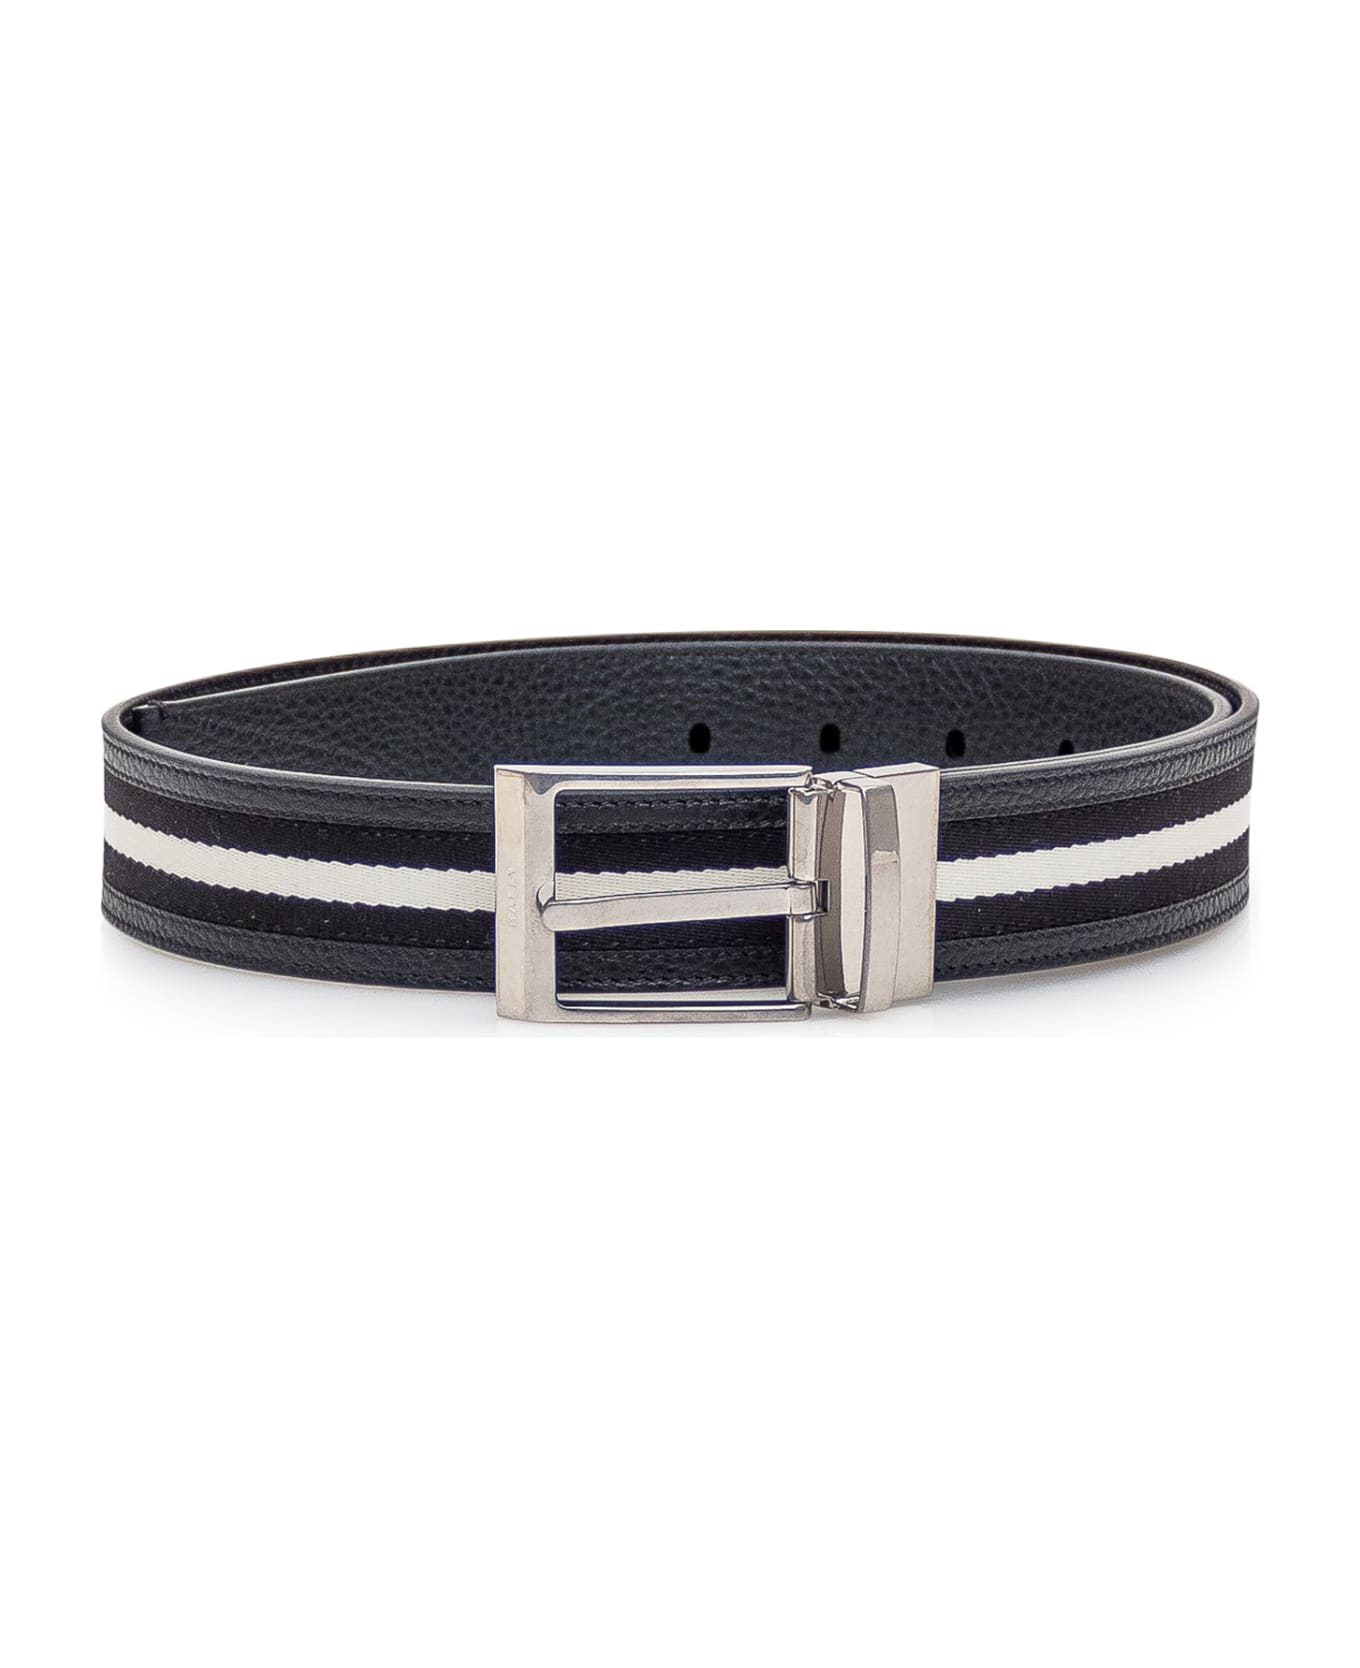 Bally Leather Belt - BLACK+BLK/BONE+PALL ベルト